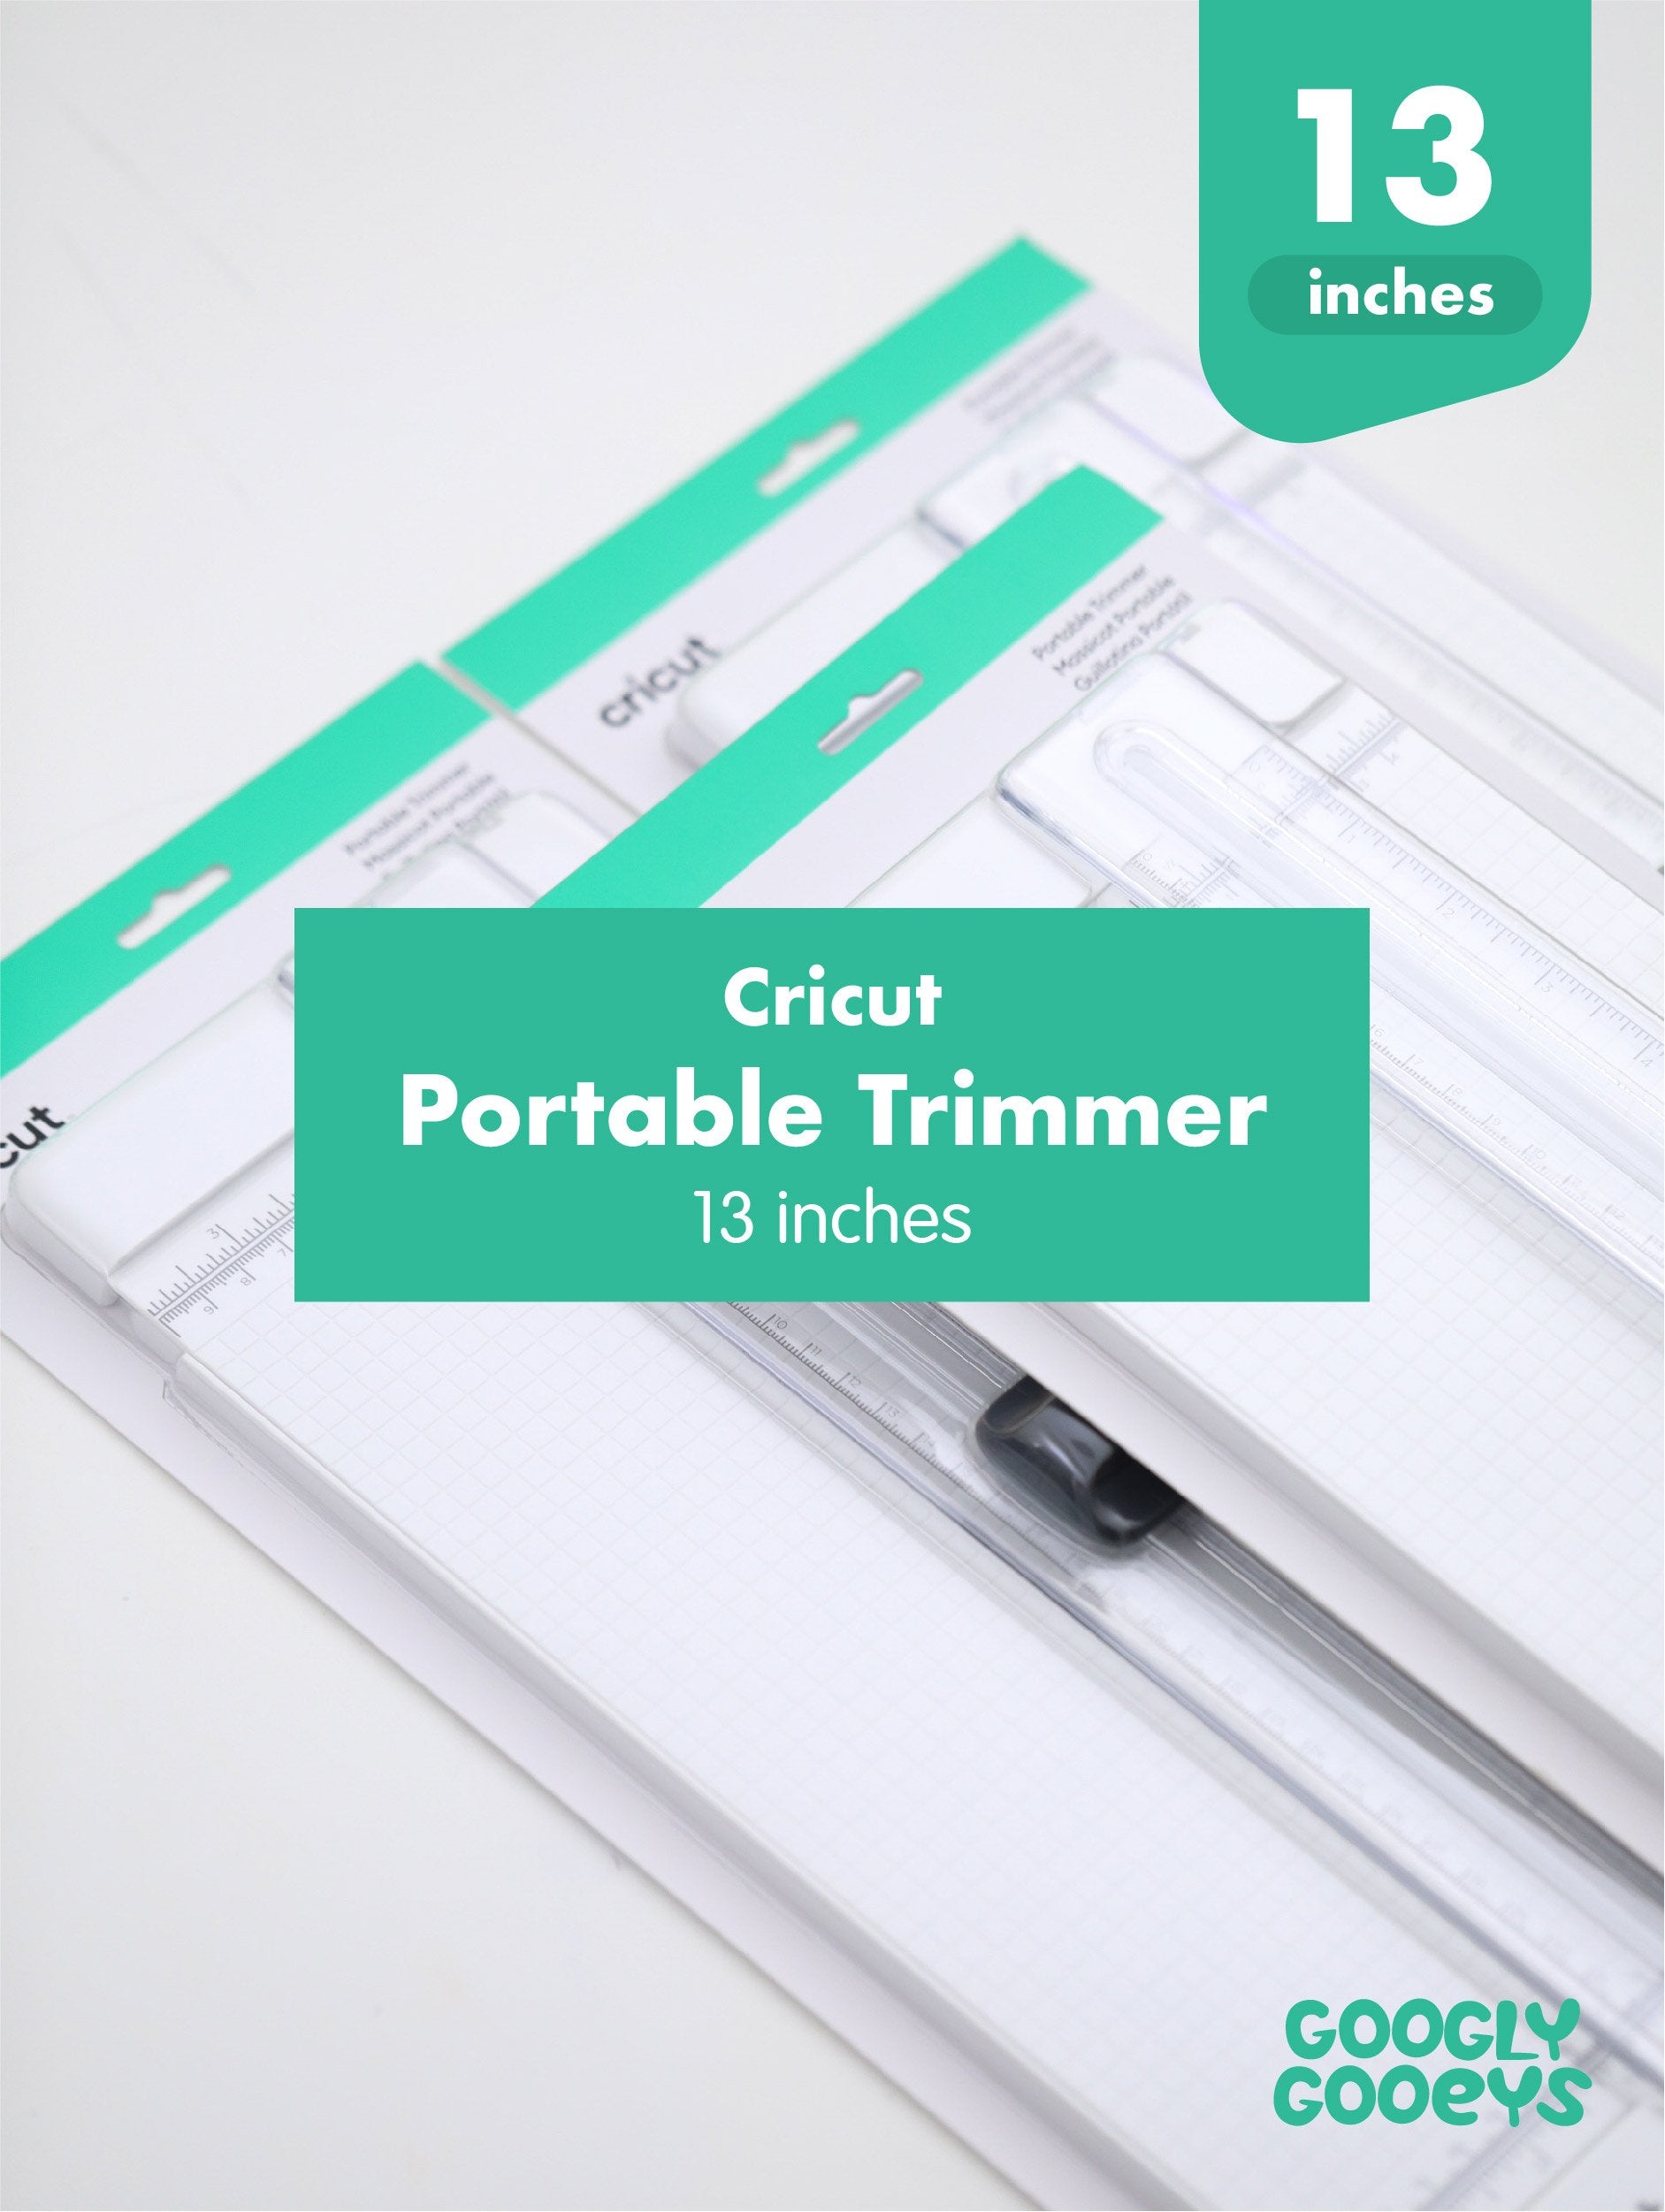 Cricut Portable Trimmer (13 inches)